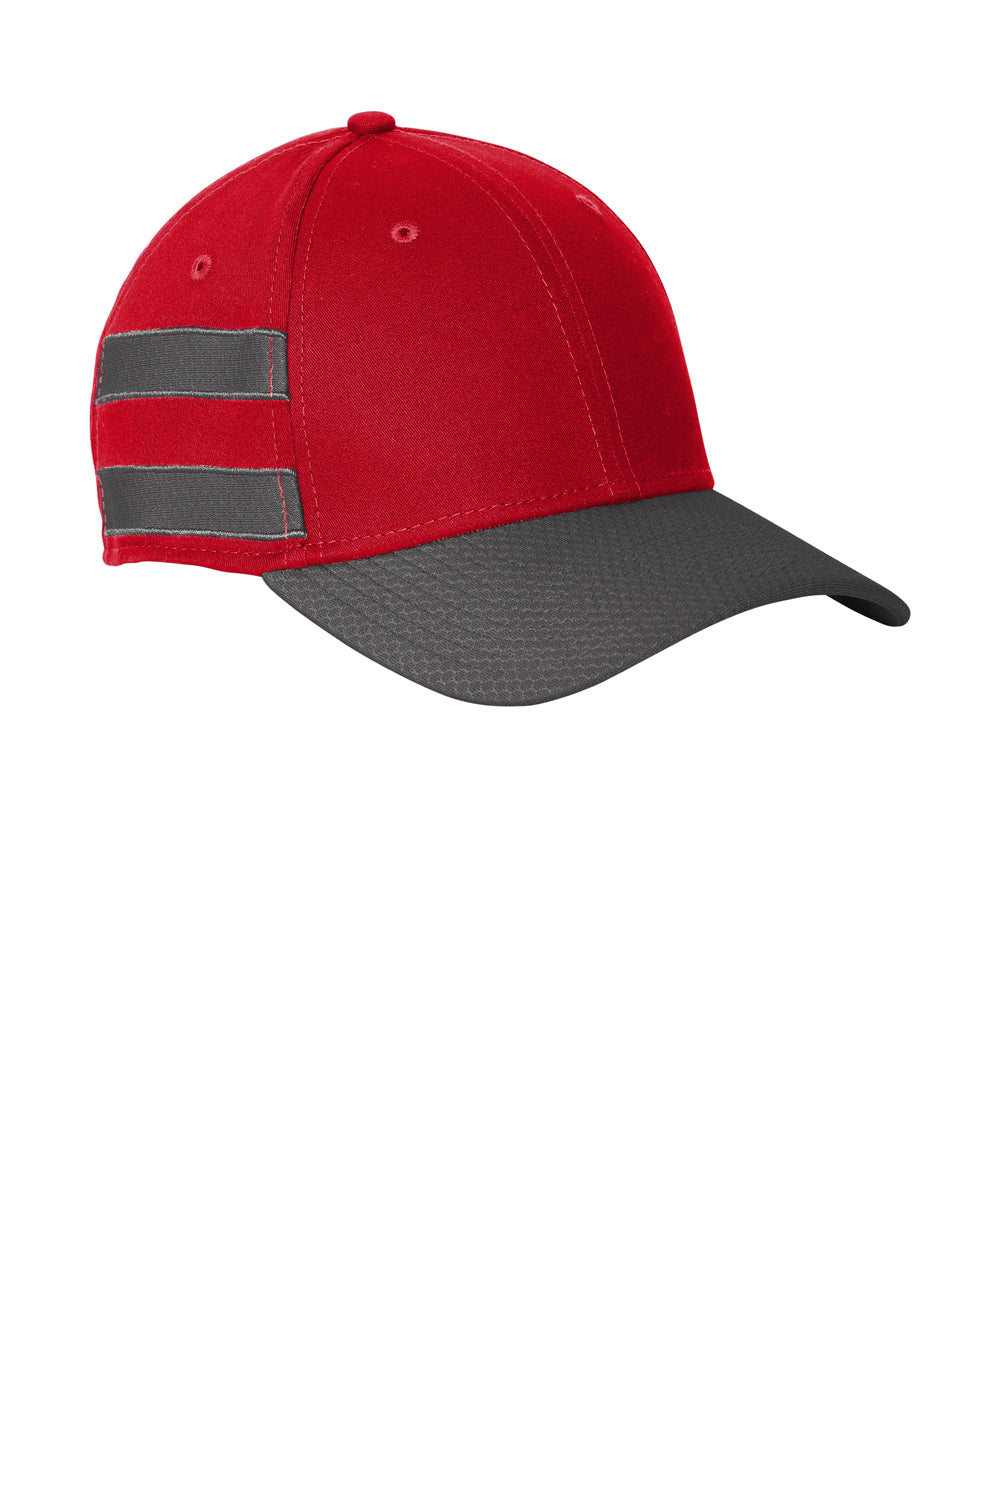 New Era NE1122 Striped Stretch Fit Hat Scarlet Red/Graphite Grey Back